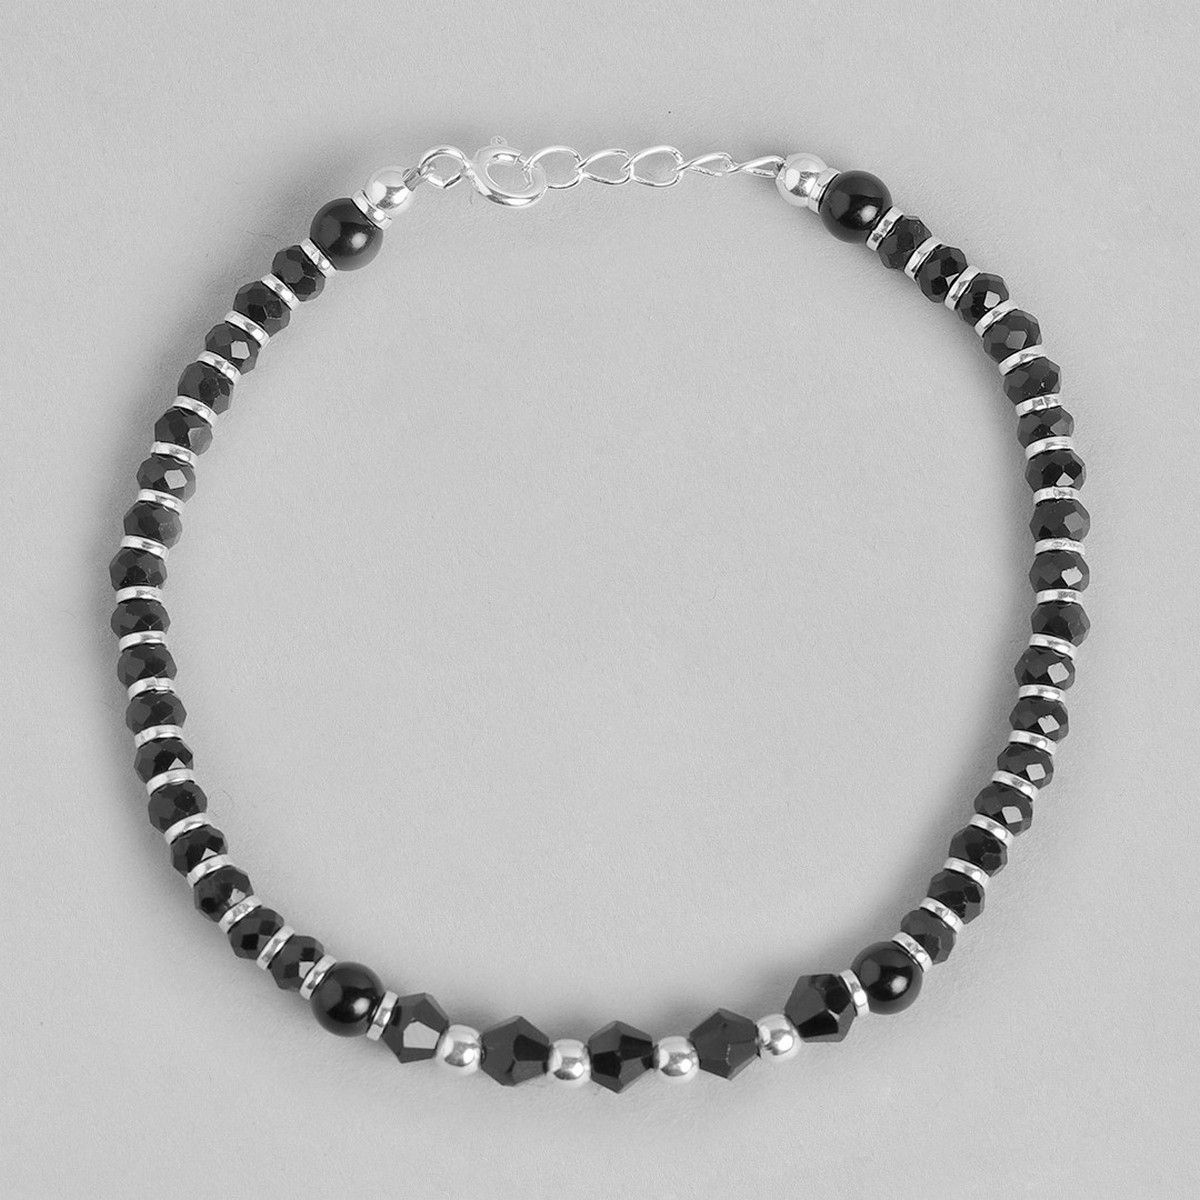 Stylish Black Silver With American Diamond Bracelet For Girls  Women